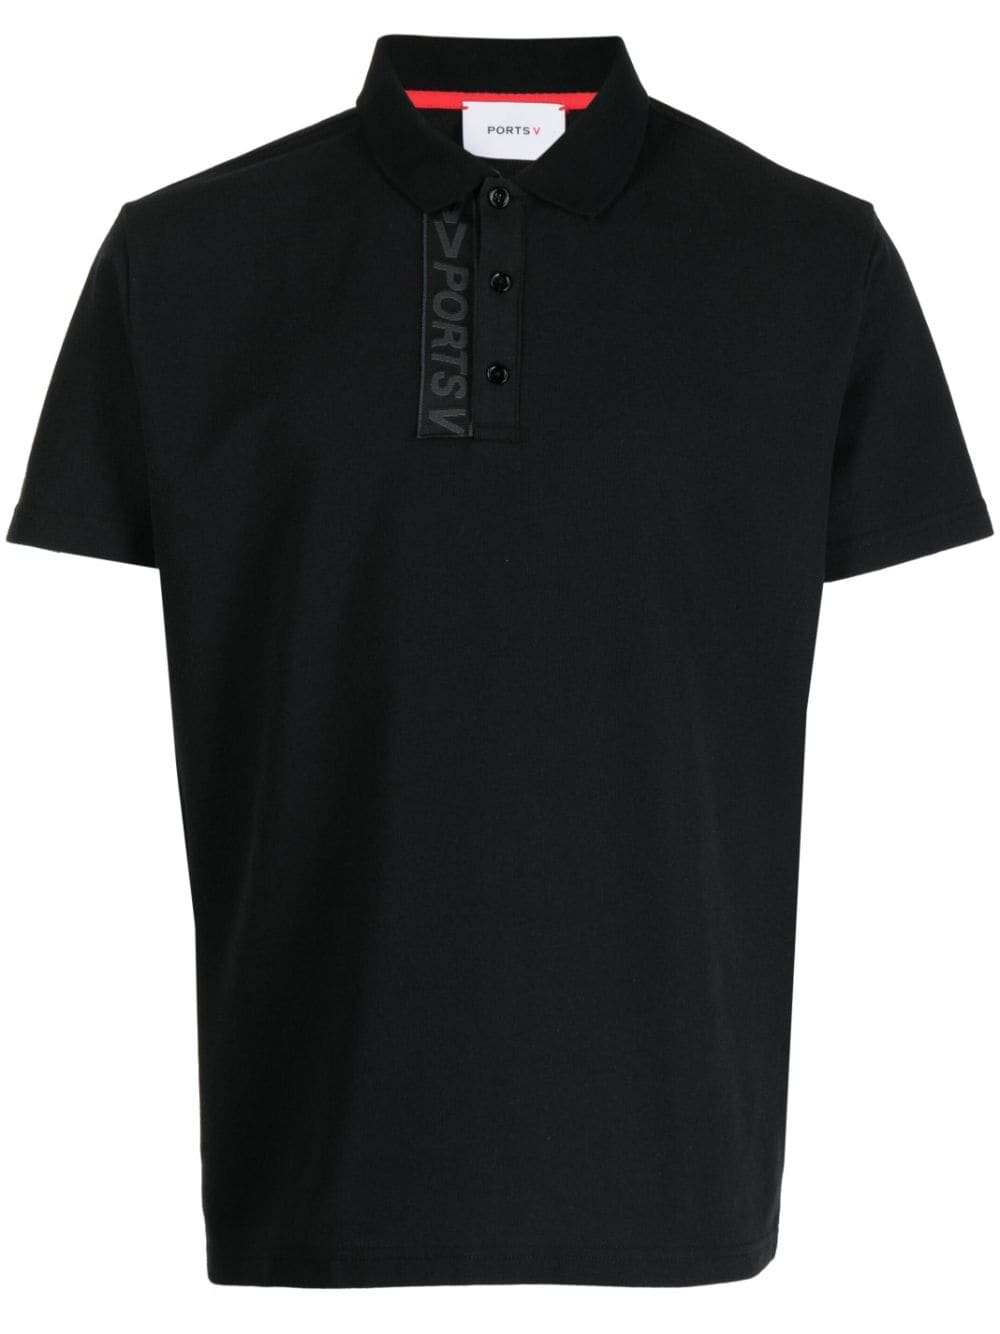 Ports V logo-tape polo shirt - Black